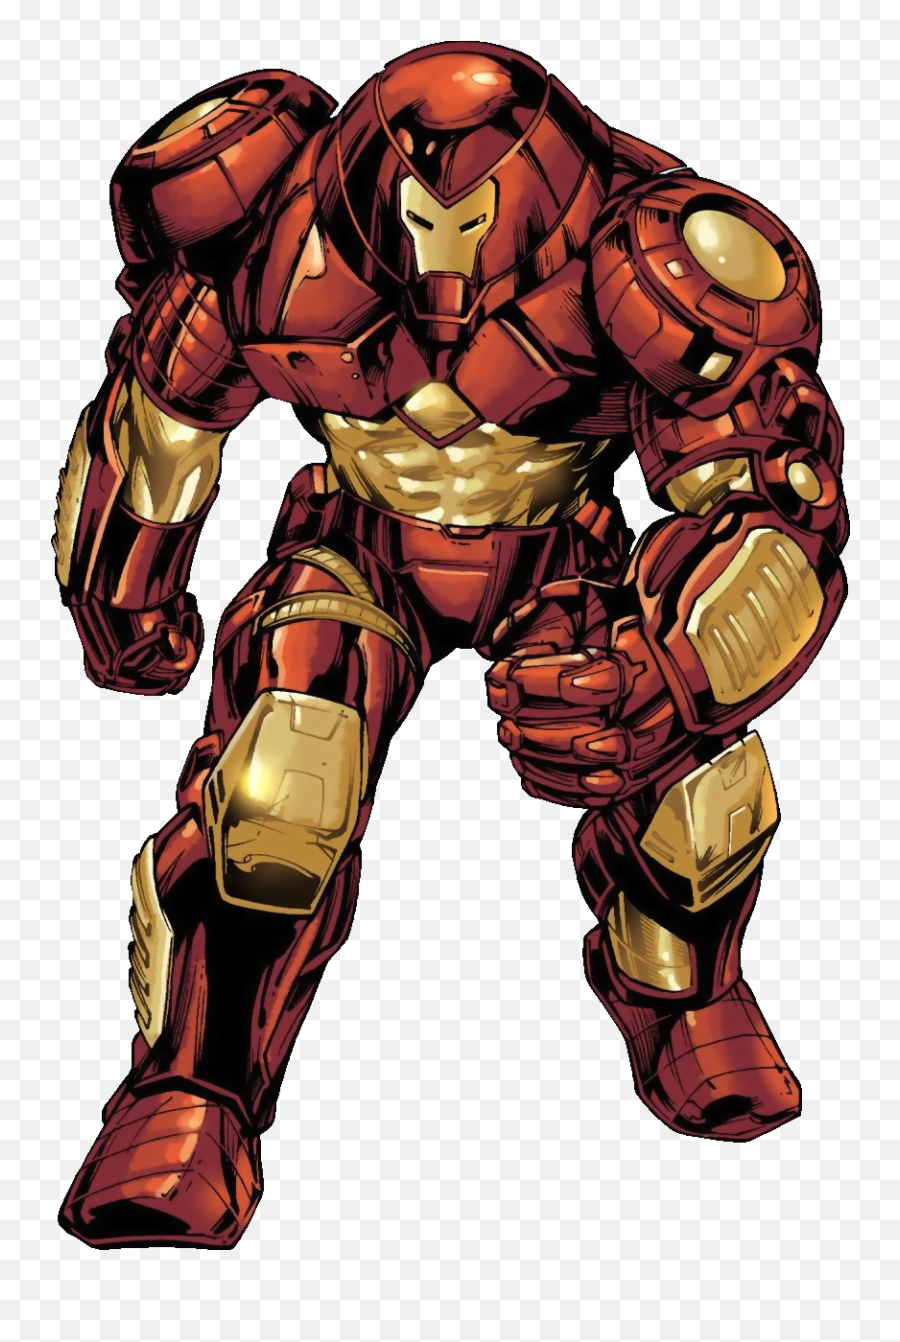 Ironman Comic Png Picture - Iron Man Hulkbuster Armor,Iron Man Comic Png